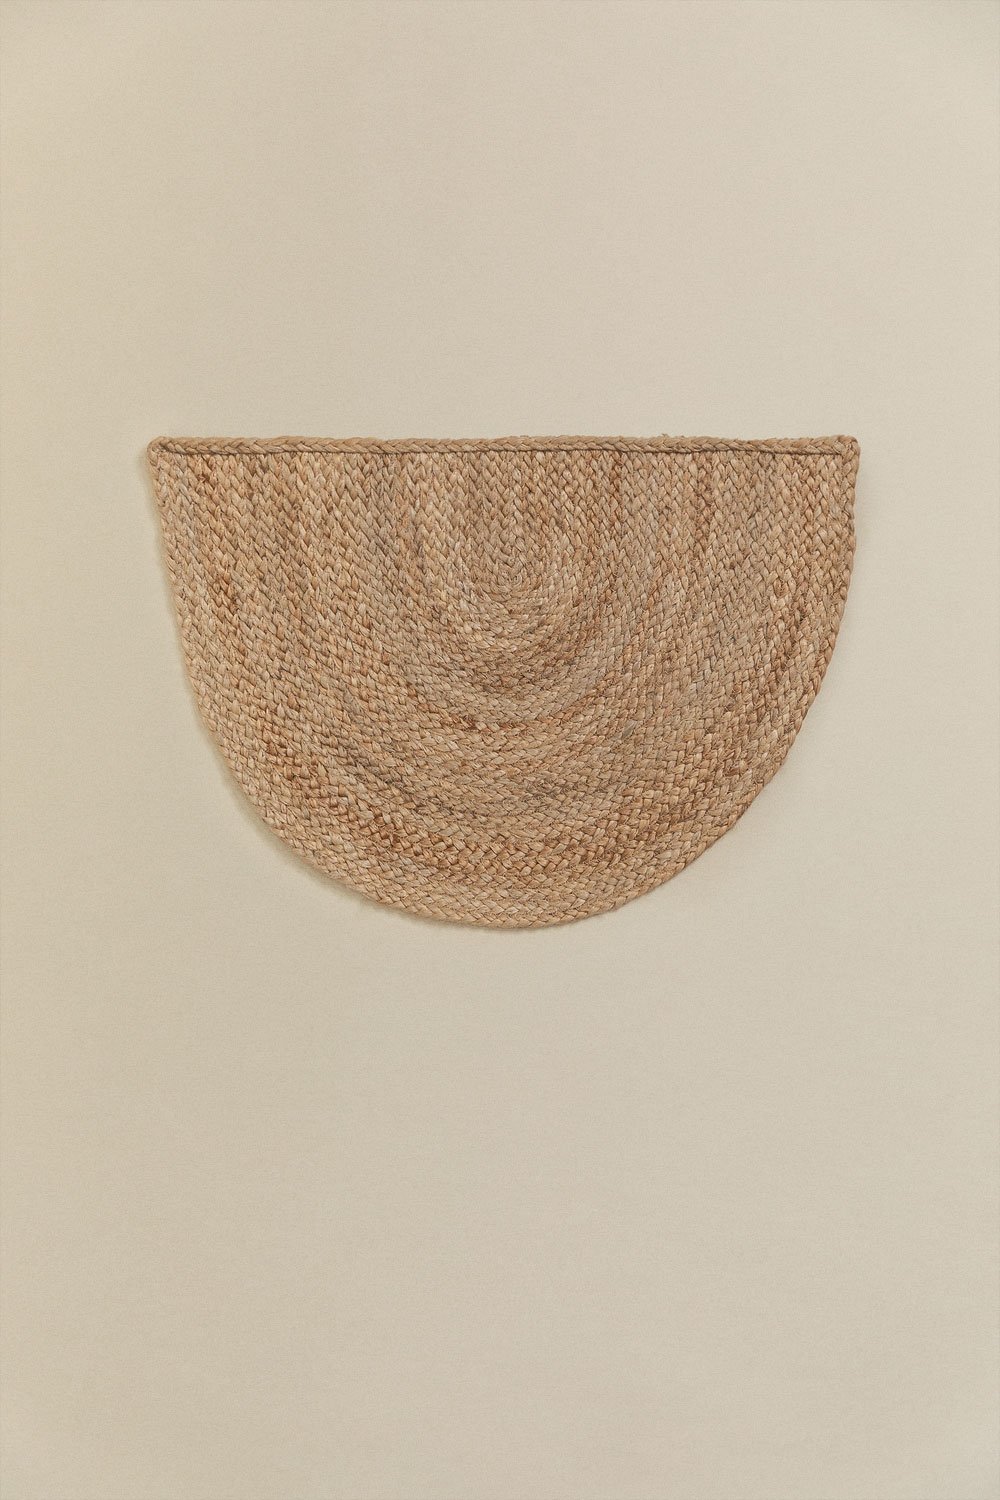 Fondreset semi-circular yute doormat (62x40 cm) , gallery image 1